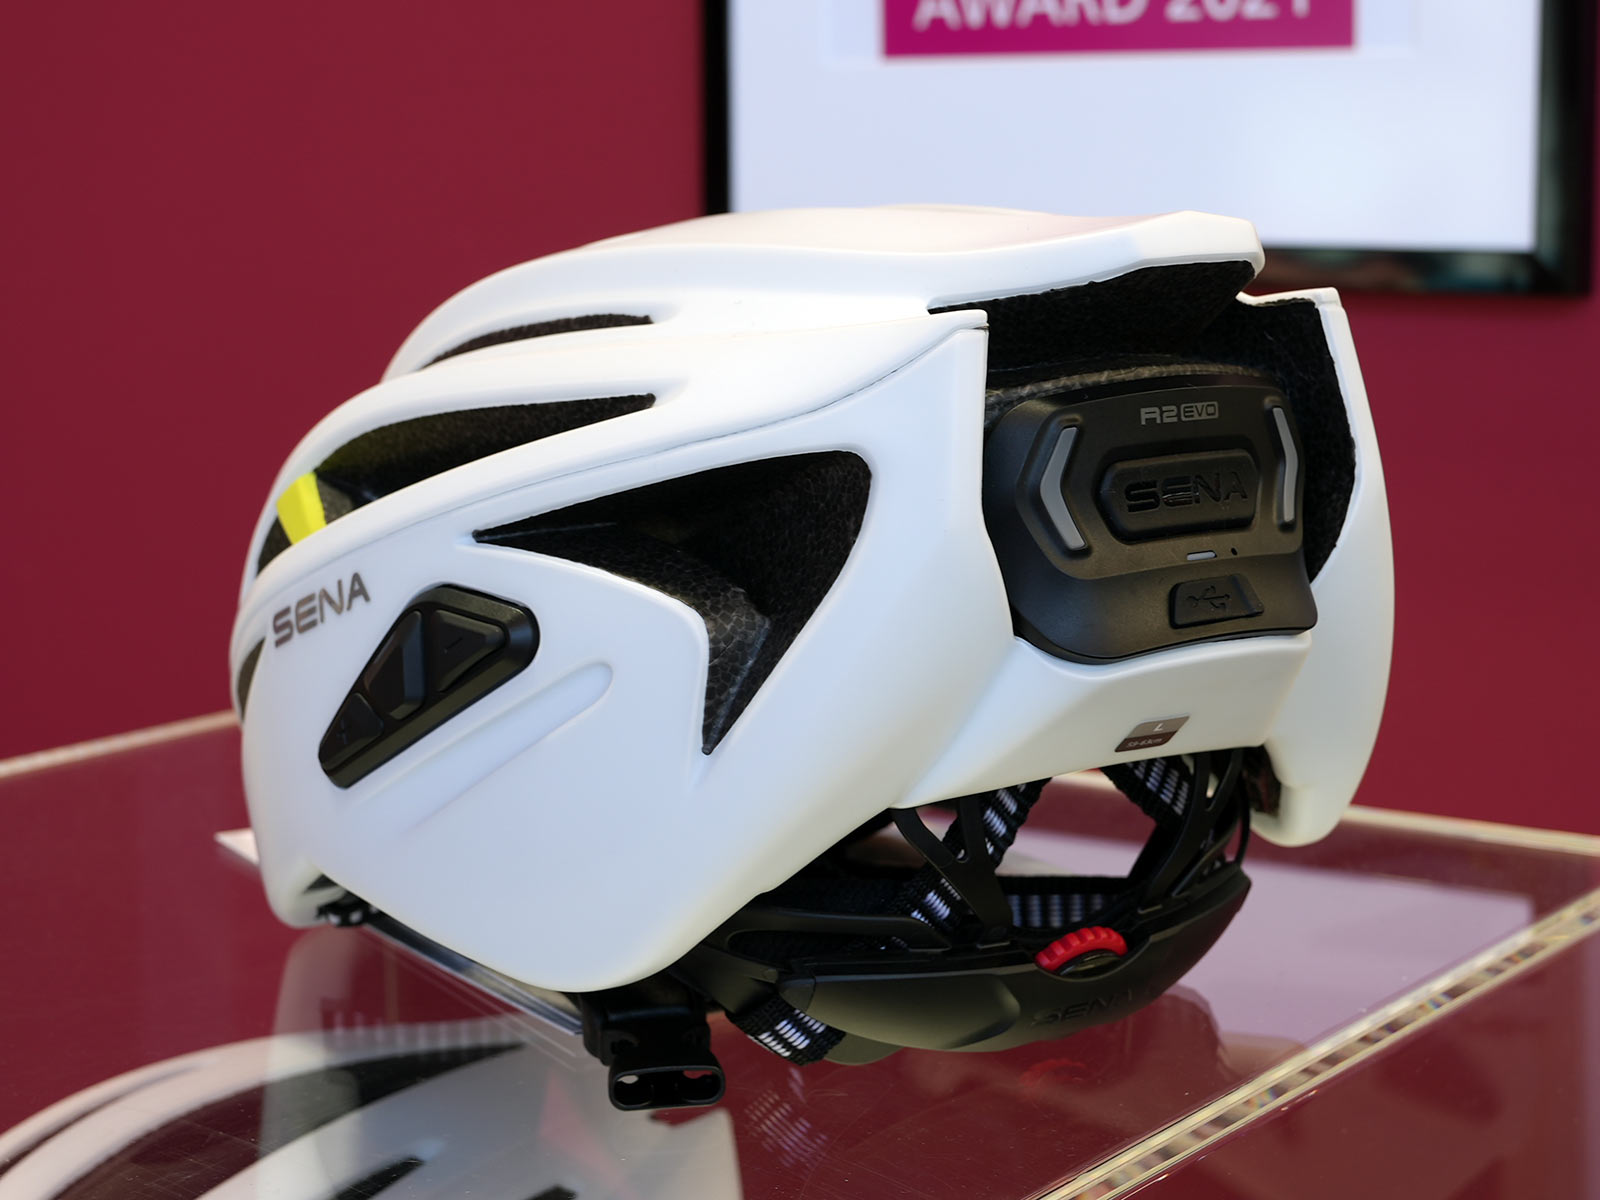 sena r2 road bike helmet with intercom wireless communication and bluetooth speaker shown from behind